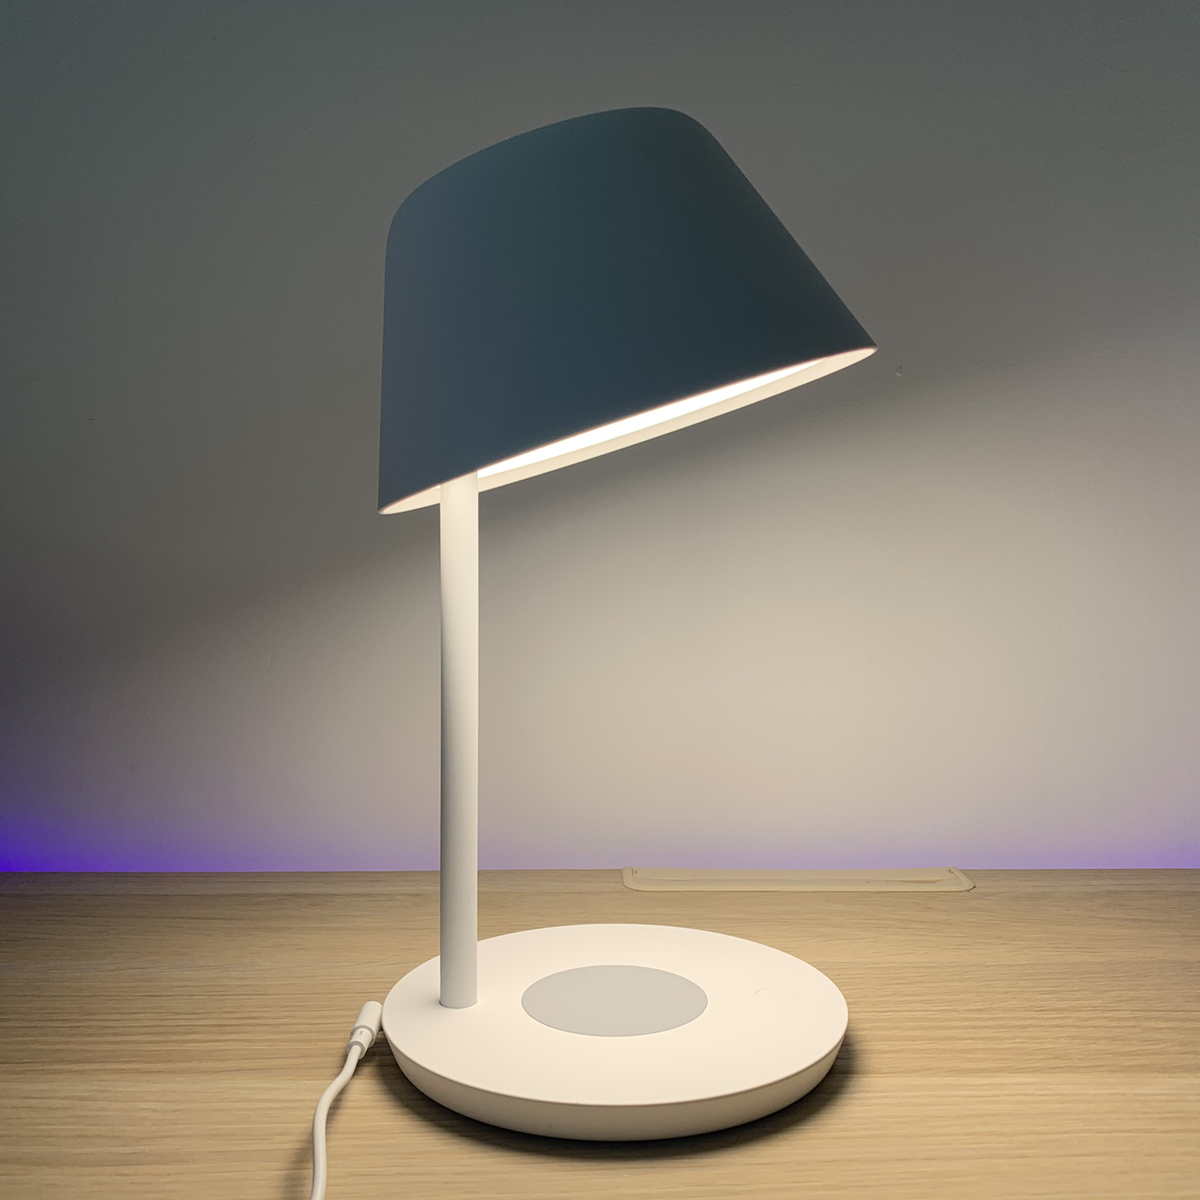 Yeelight Star Desk Lamp Pro First Look Homekit News And Reviews